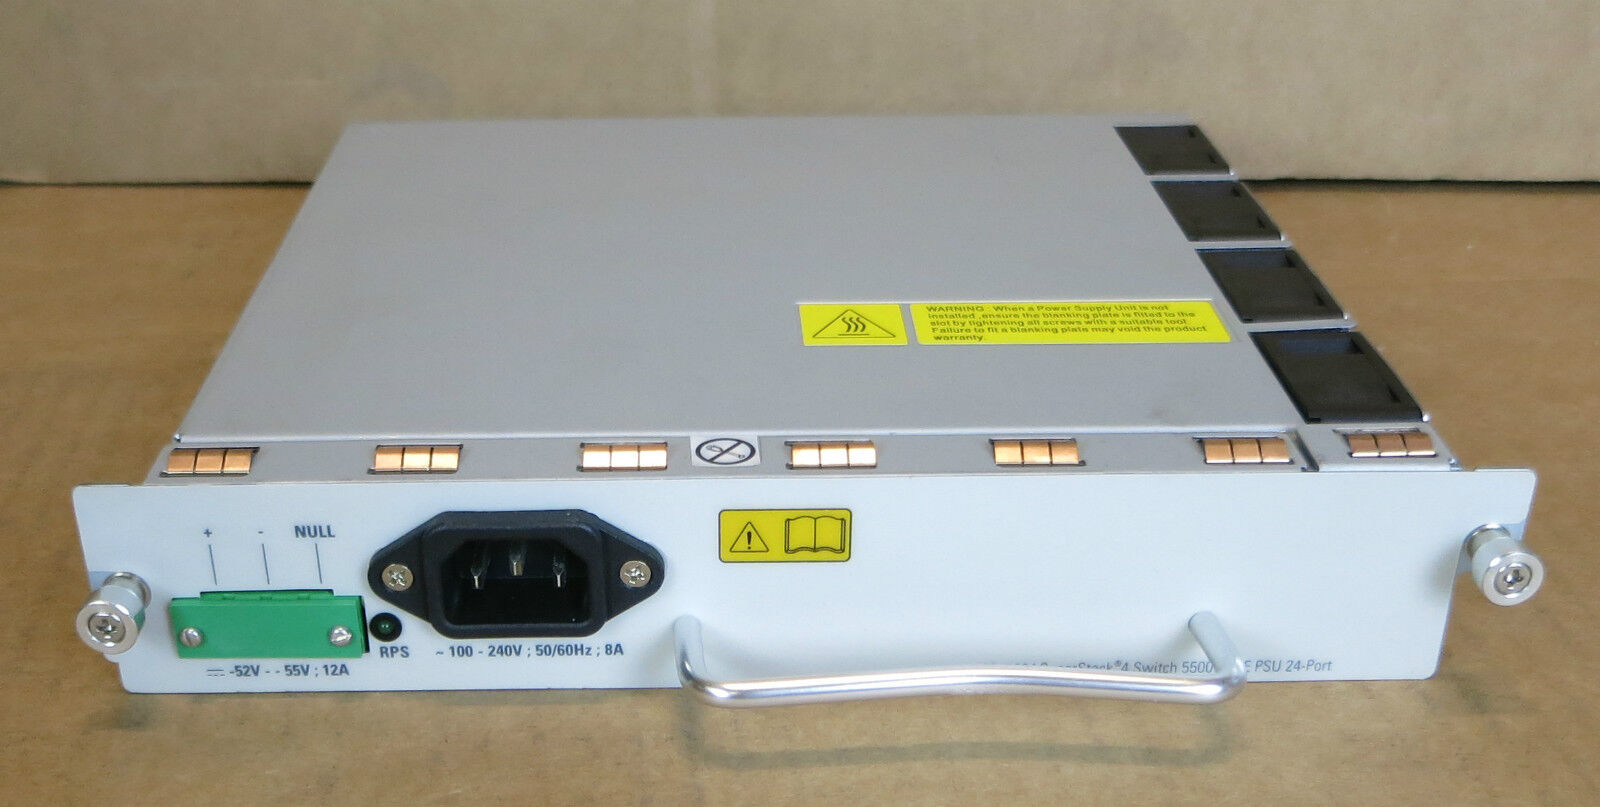 3Com Superstack 4 Switch 5500G PoE 24 Port PSU Power Supply 3C17264